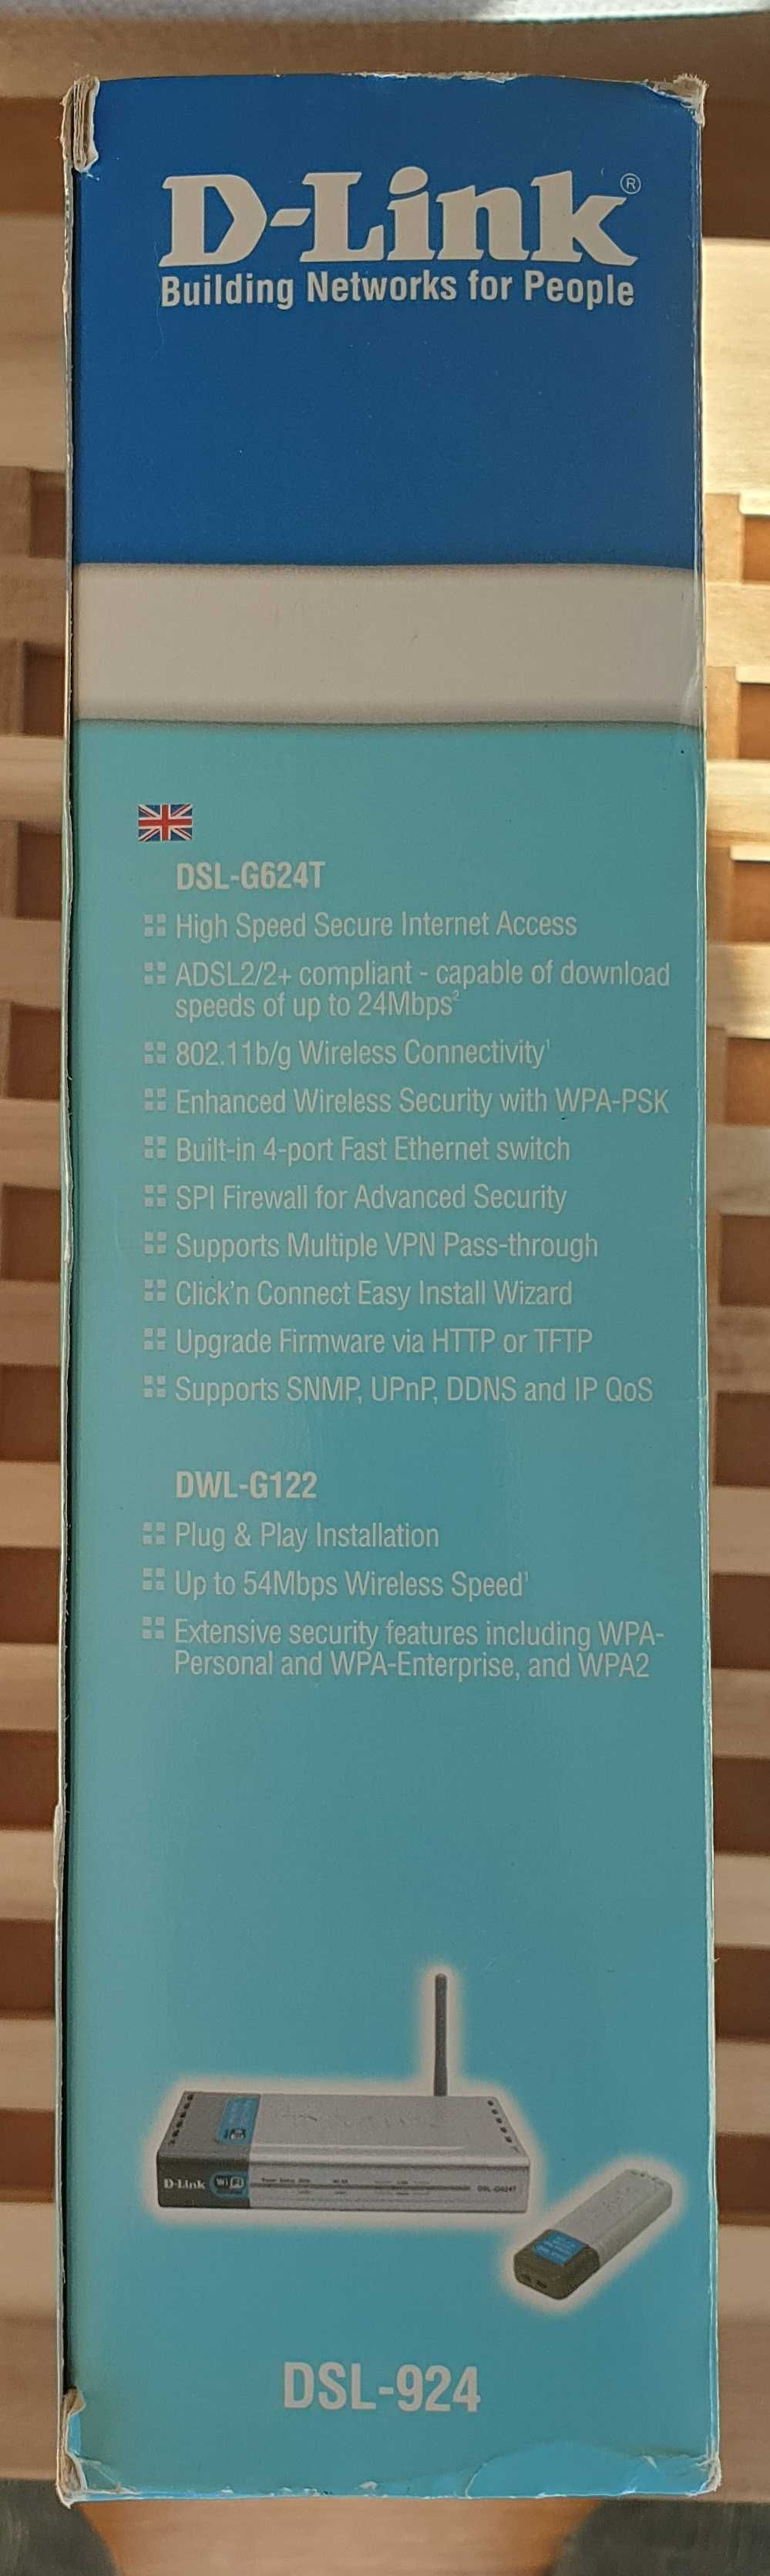 Wireless G ADSL2 2+ Router Kit DSL-924